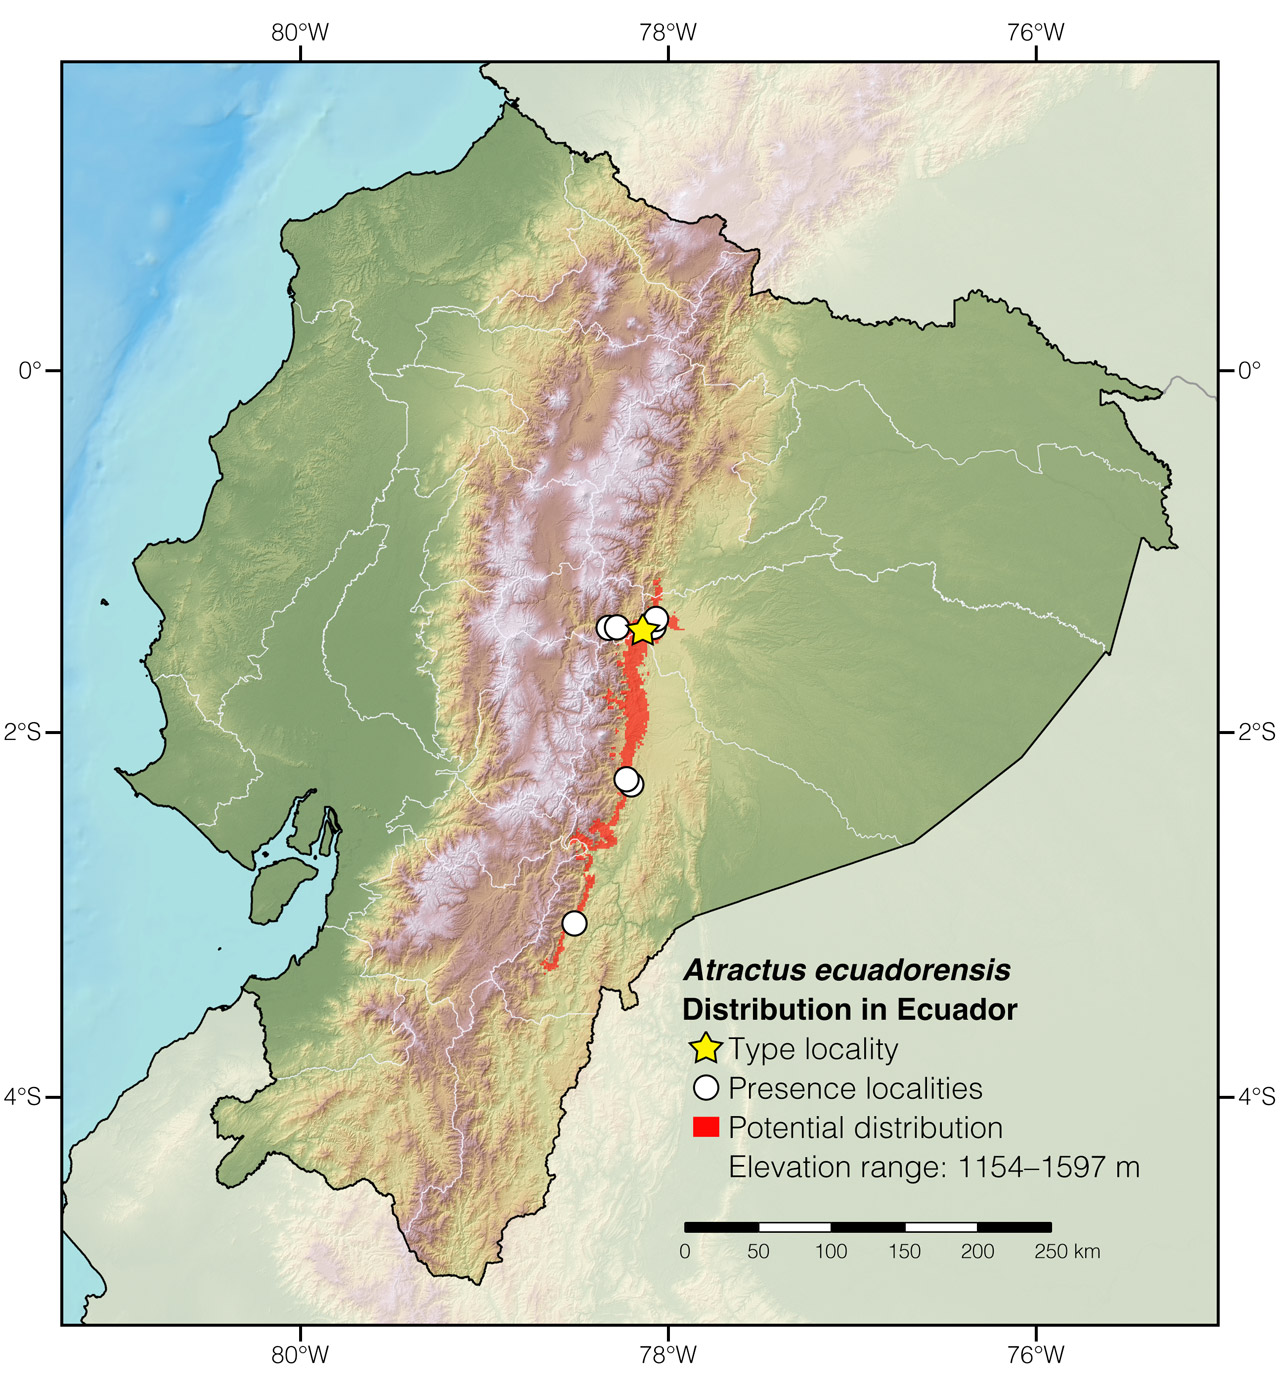 Distribution of Atractus ecuadorensis in Ecuador